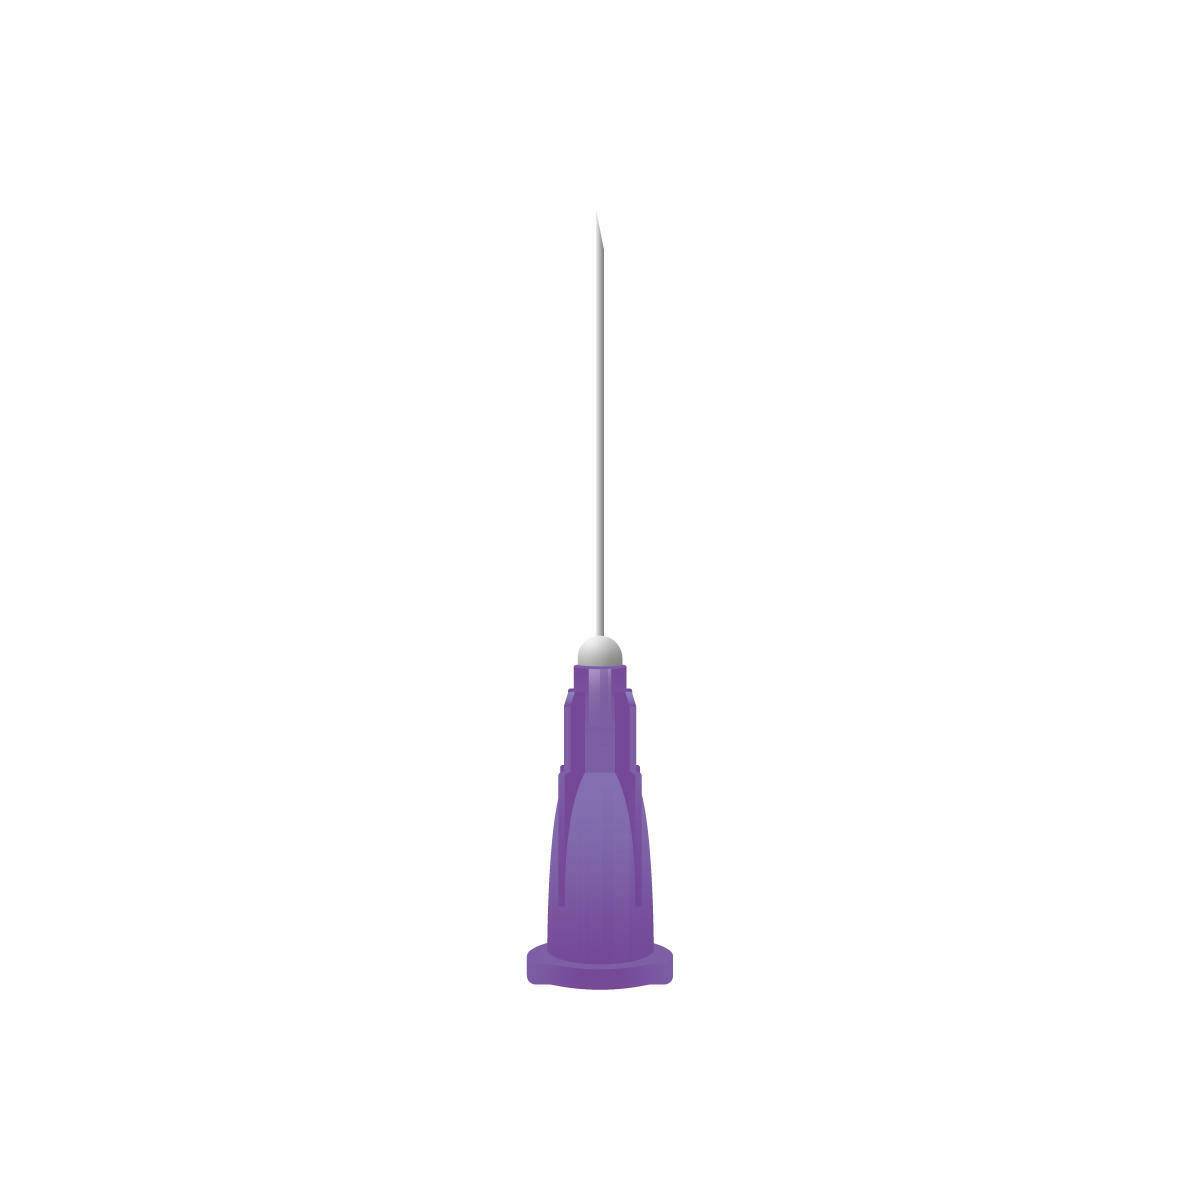 24g Purple 1 inch BD Microlance Needles (25mm x 0.55mm) - UKMEDI